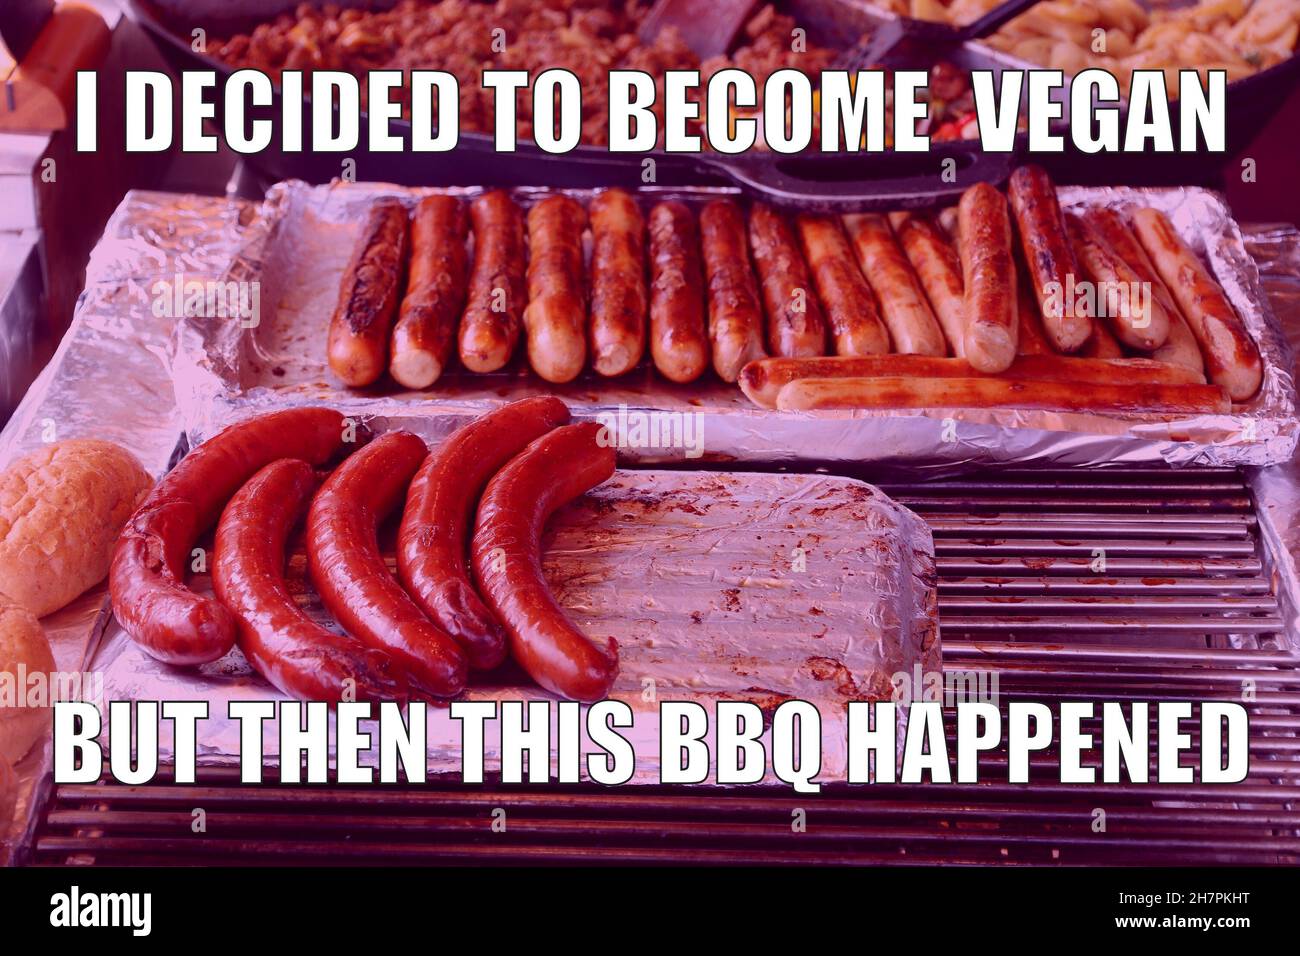 Dieta de comer carne vs dieta vegana meme divertido para compartir las redes sociales. Broma barbacoa. Foto de stock